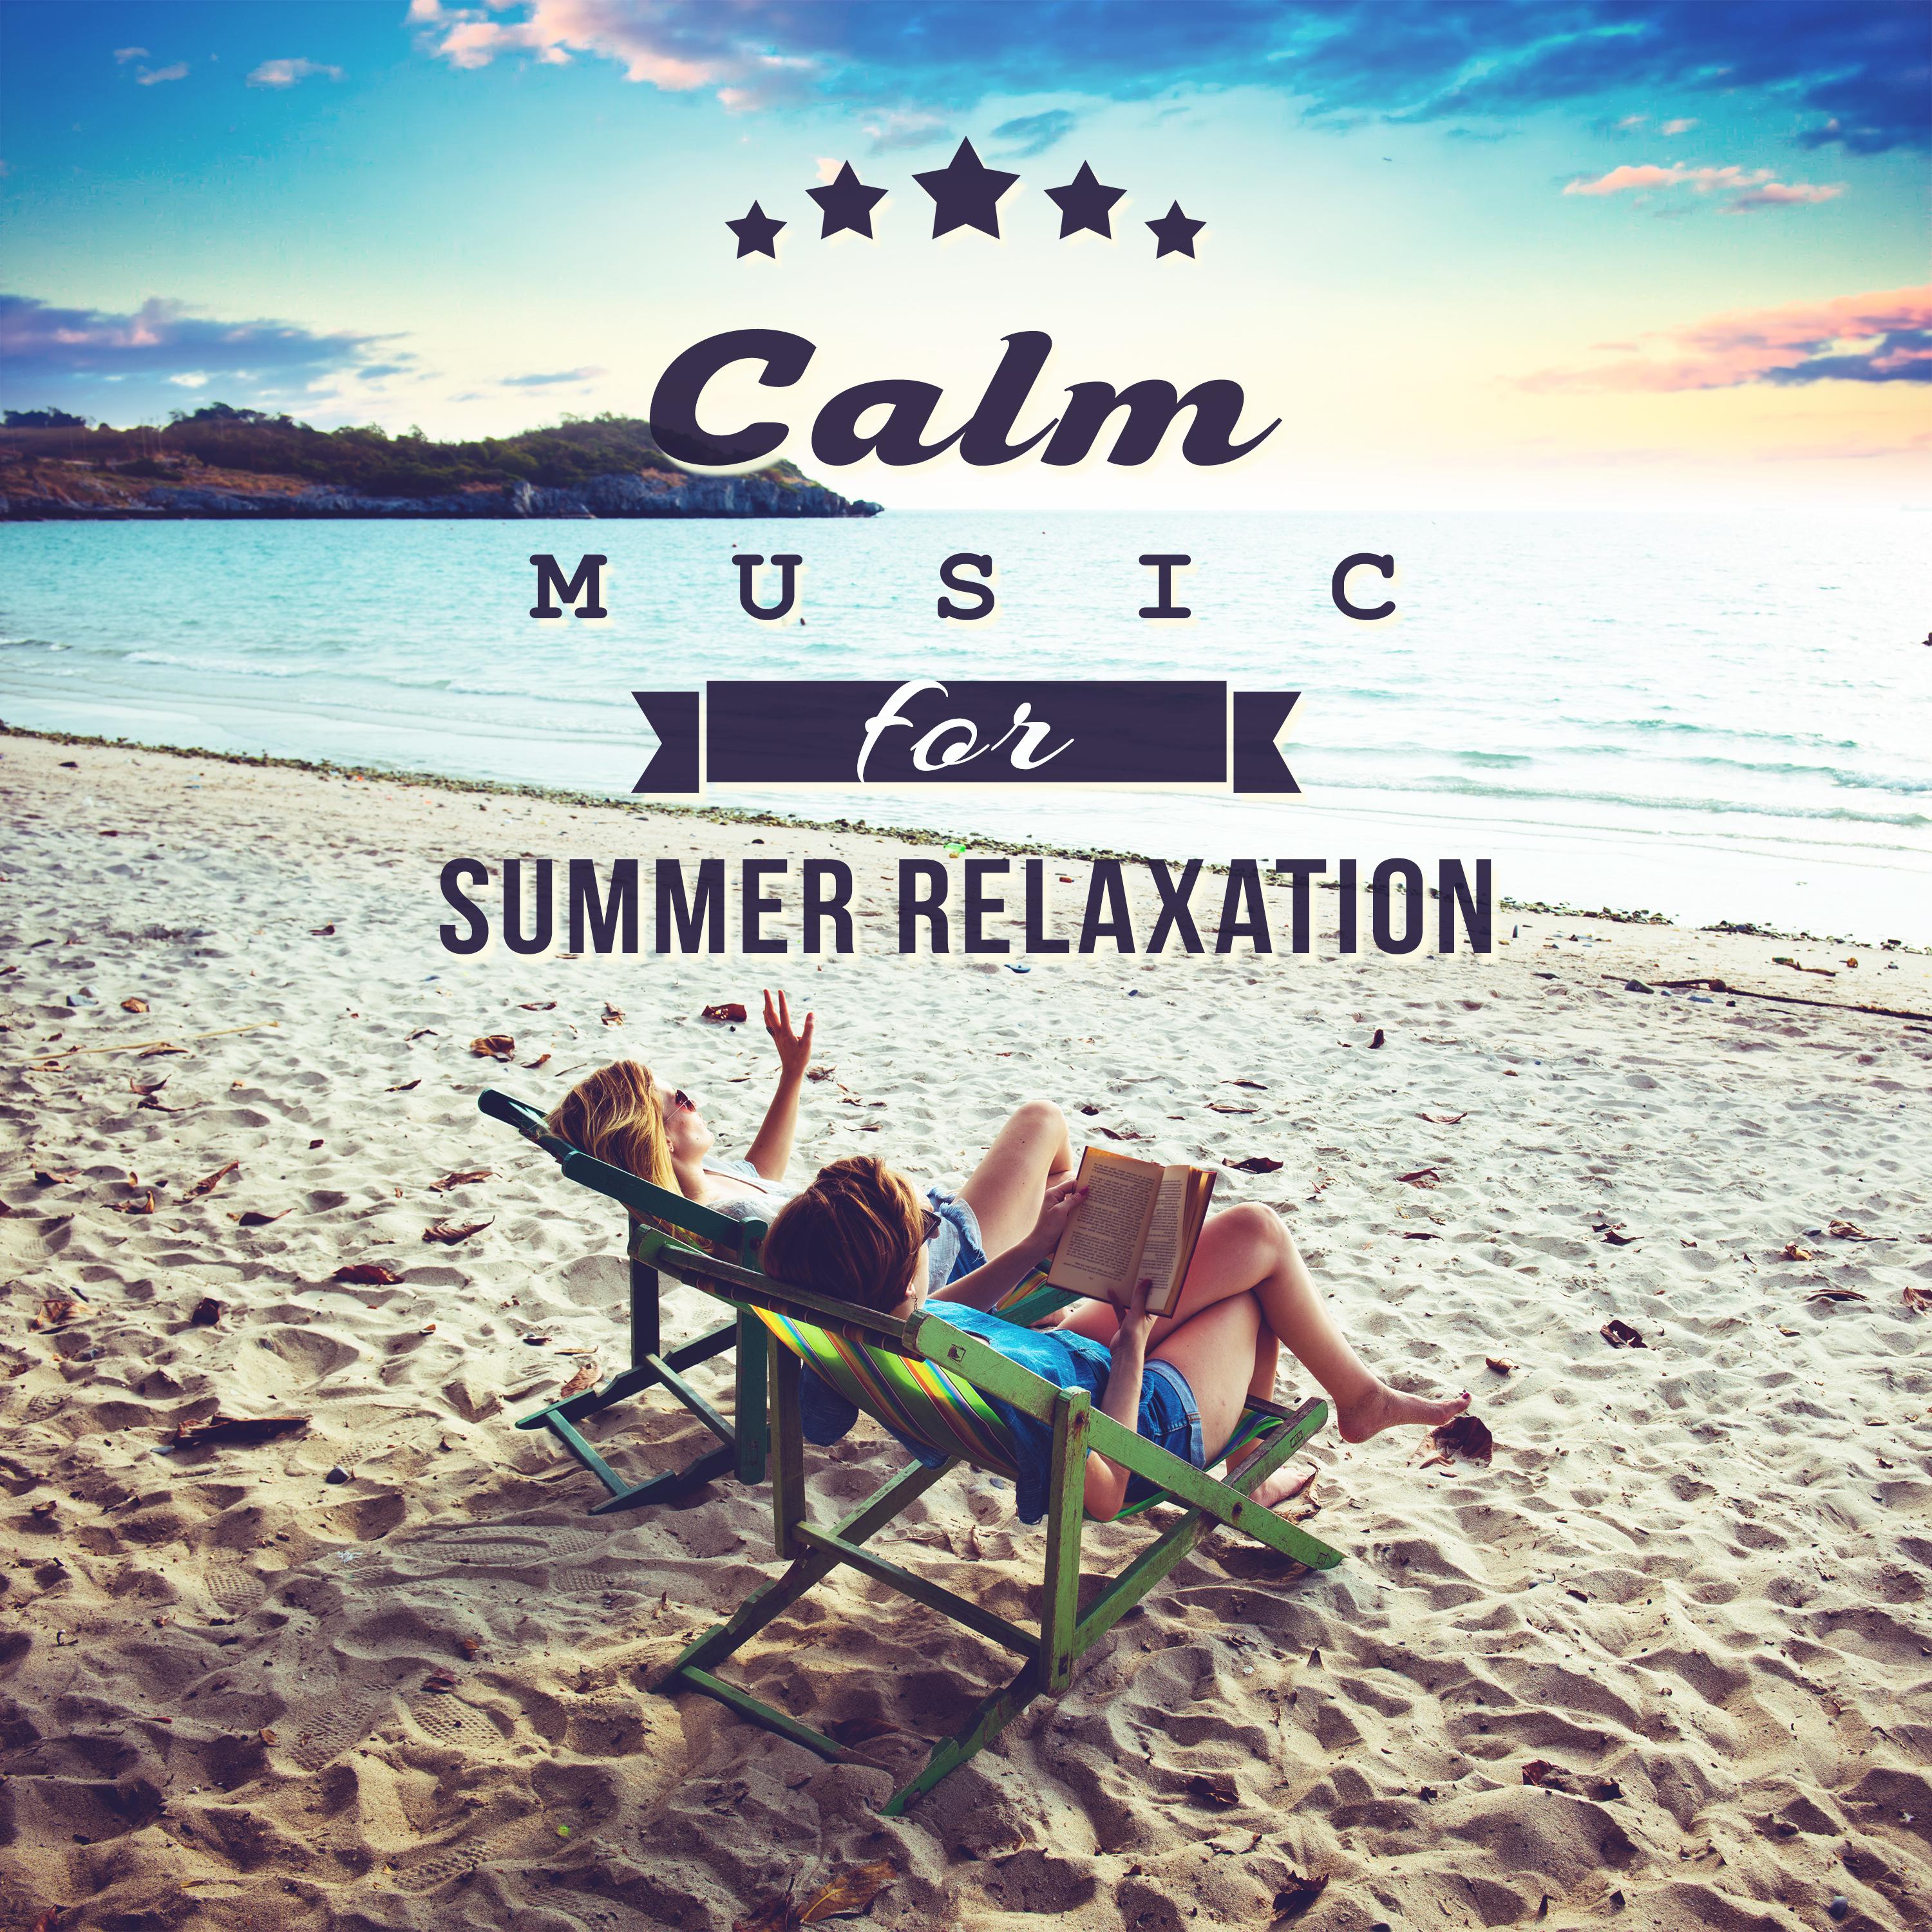 Calm Music for Summer Relaxation – Summer 2017, Journey Melodies, Rest a Bit, Beach Lounge, Sun & Sand